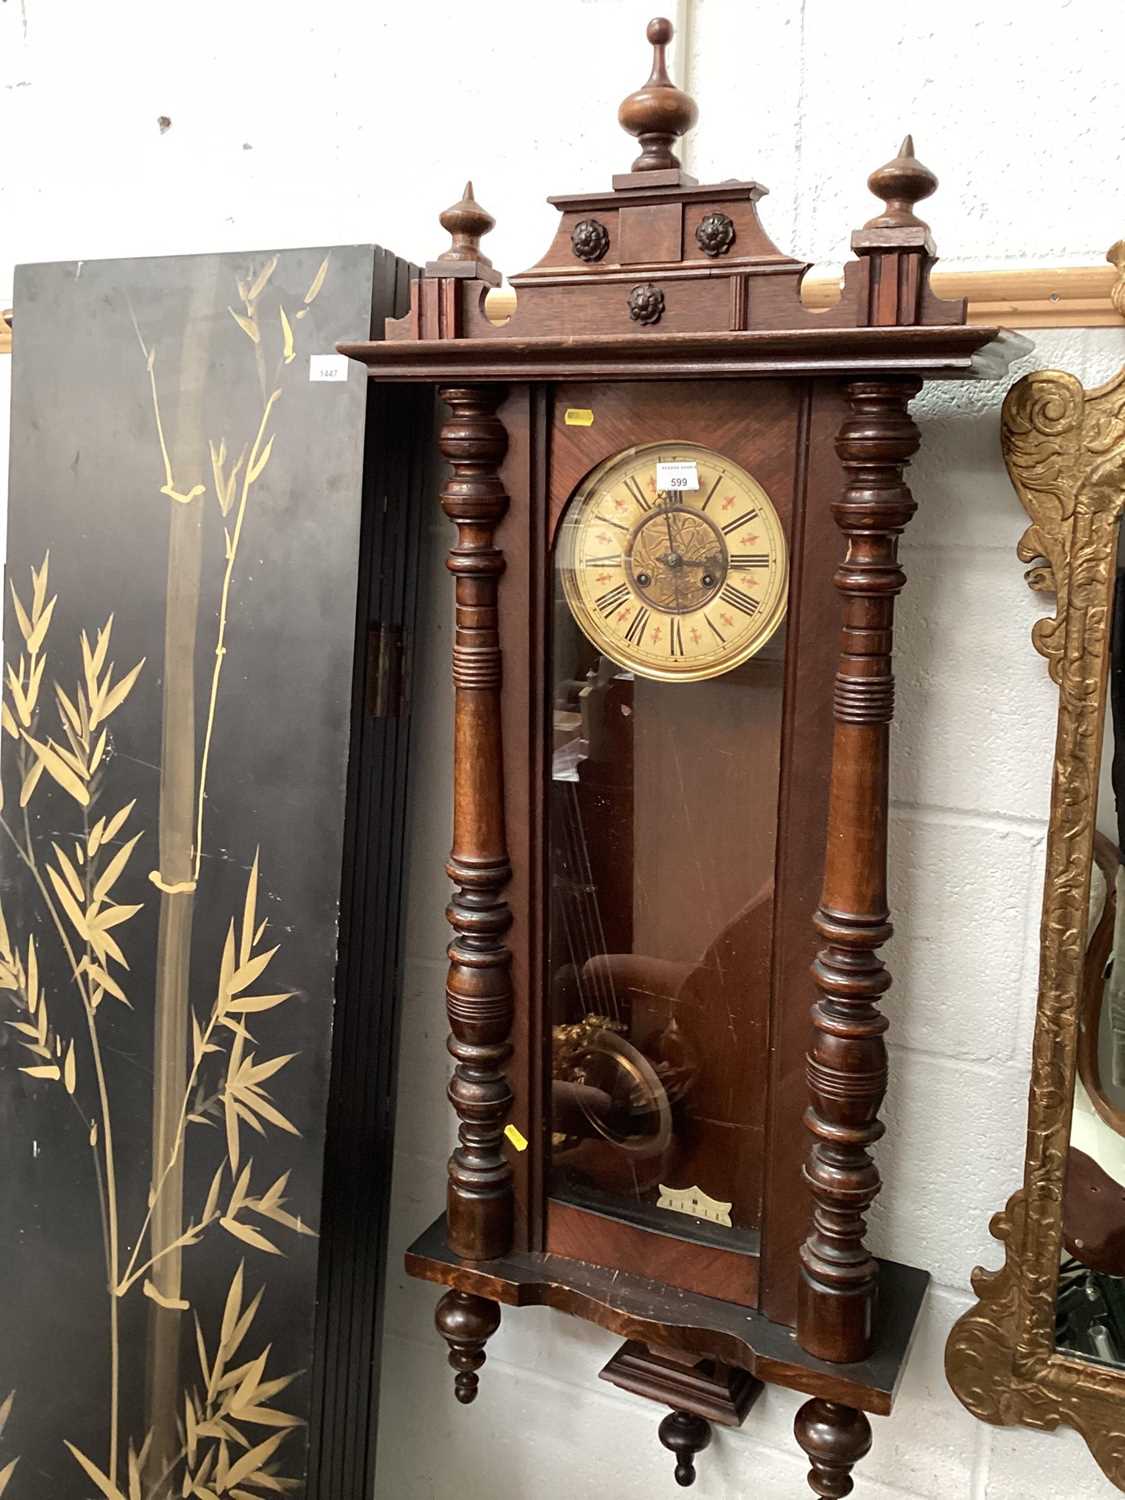 Late 19th century Vienna regulator style wall clock in walnut case